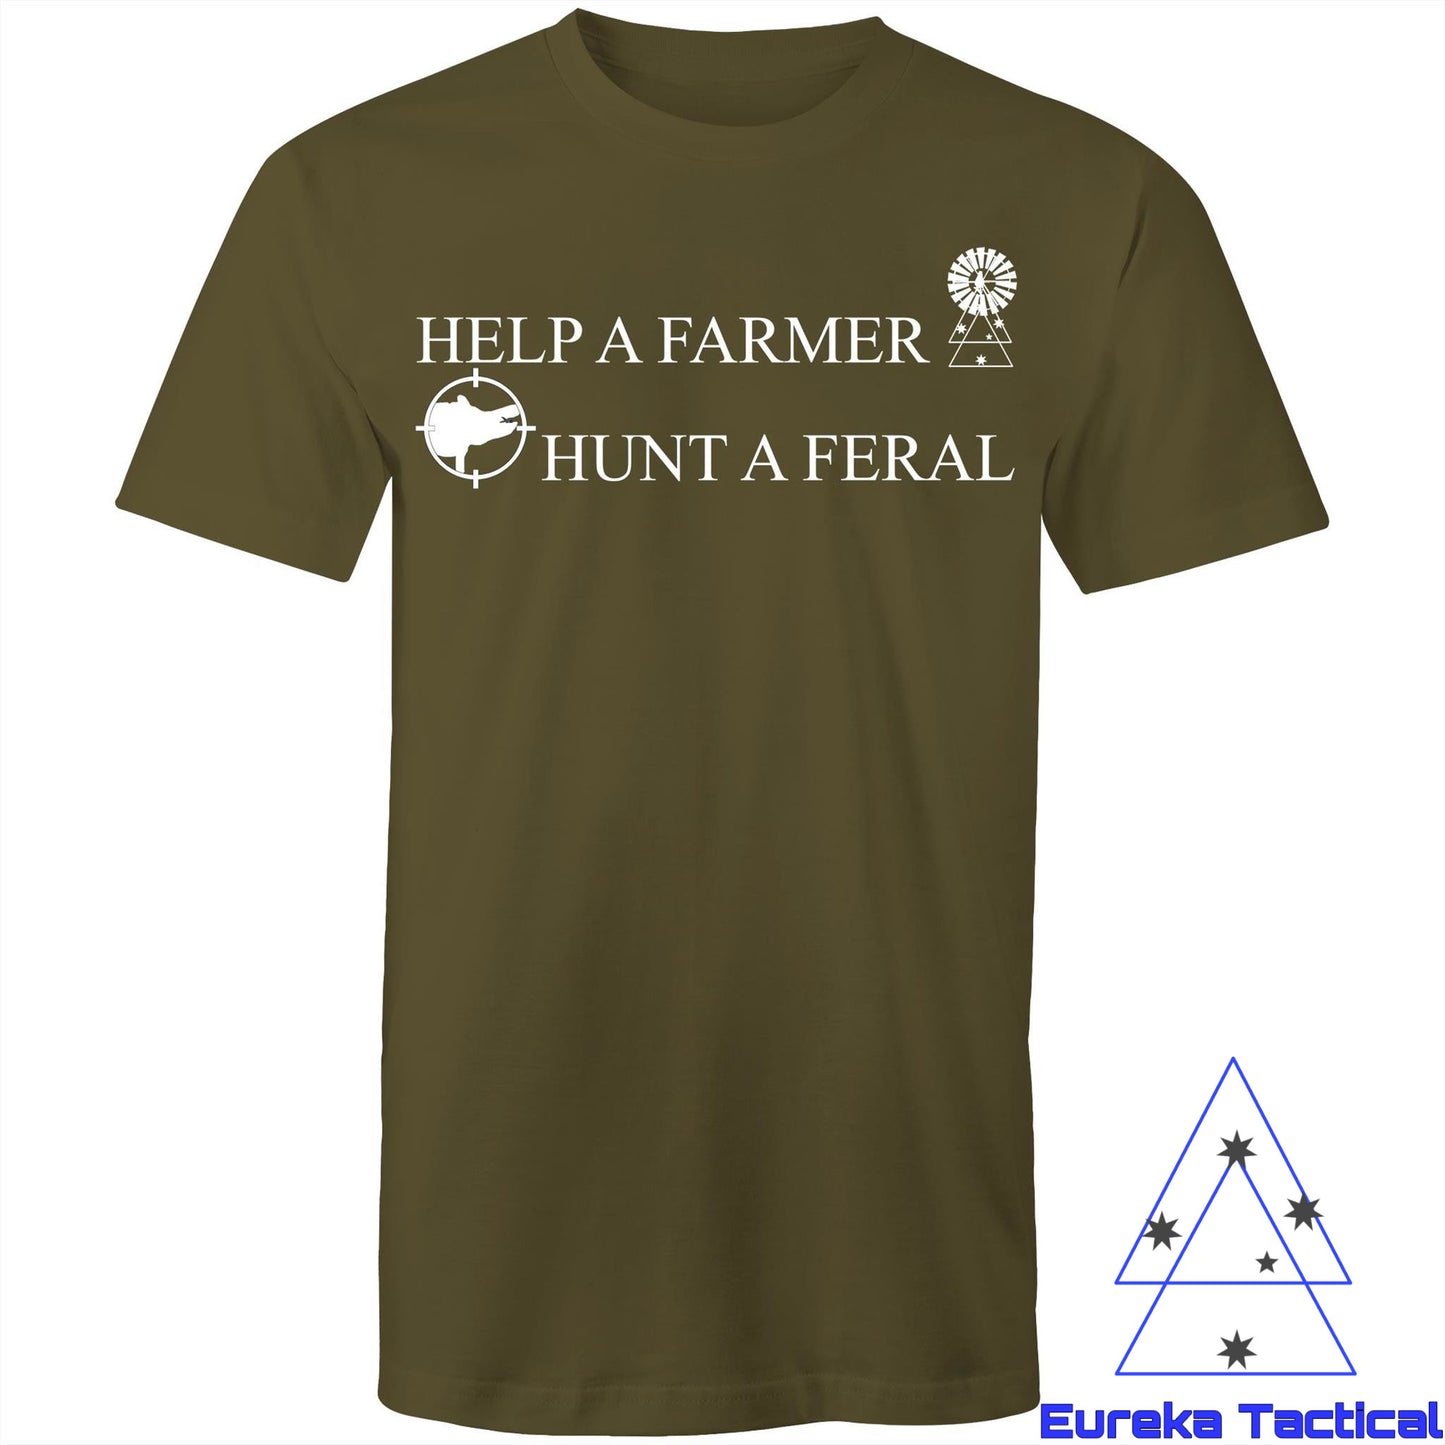 Help a farmer, hunt a feral. Men's AS Colour 100% Cotton t-shirt